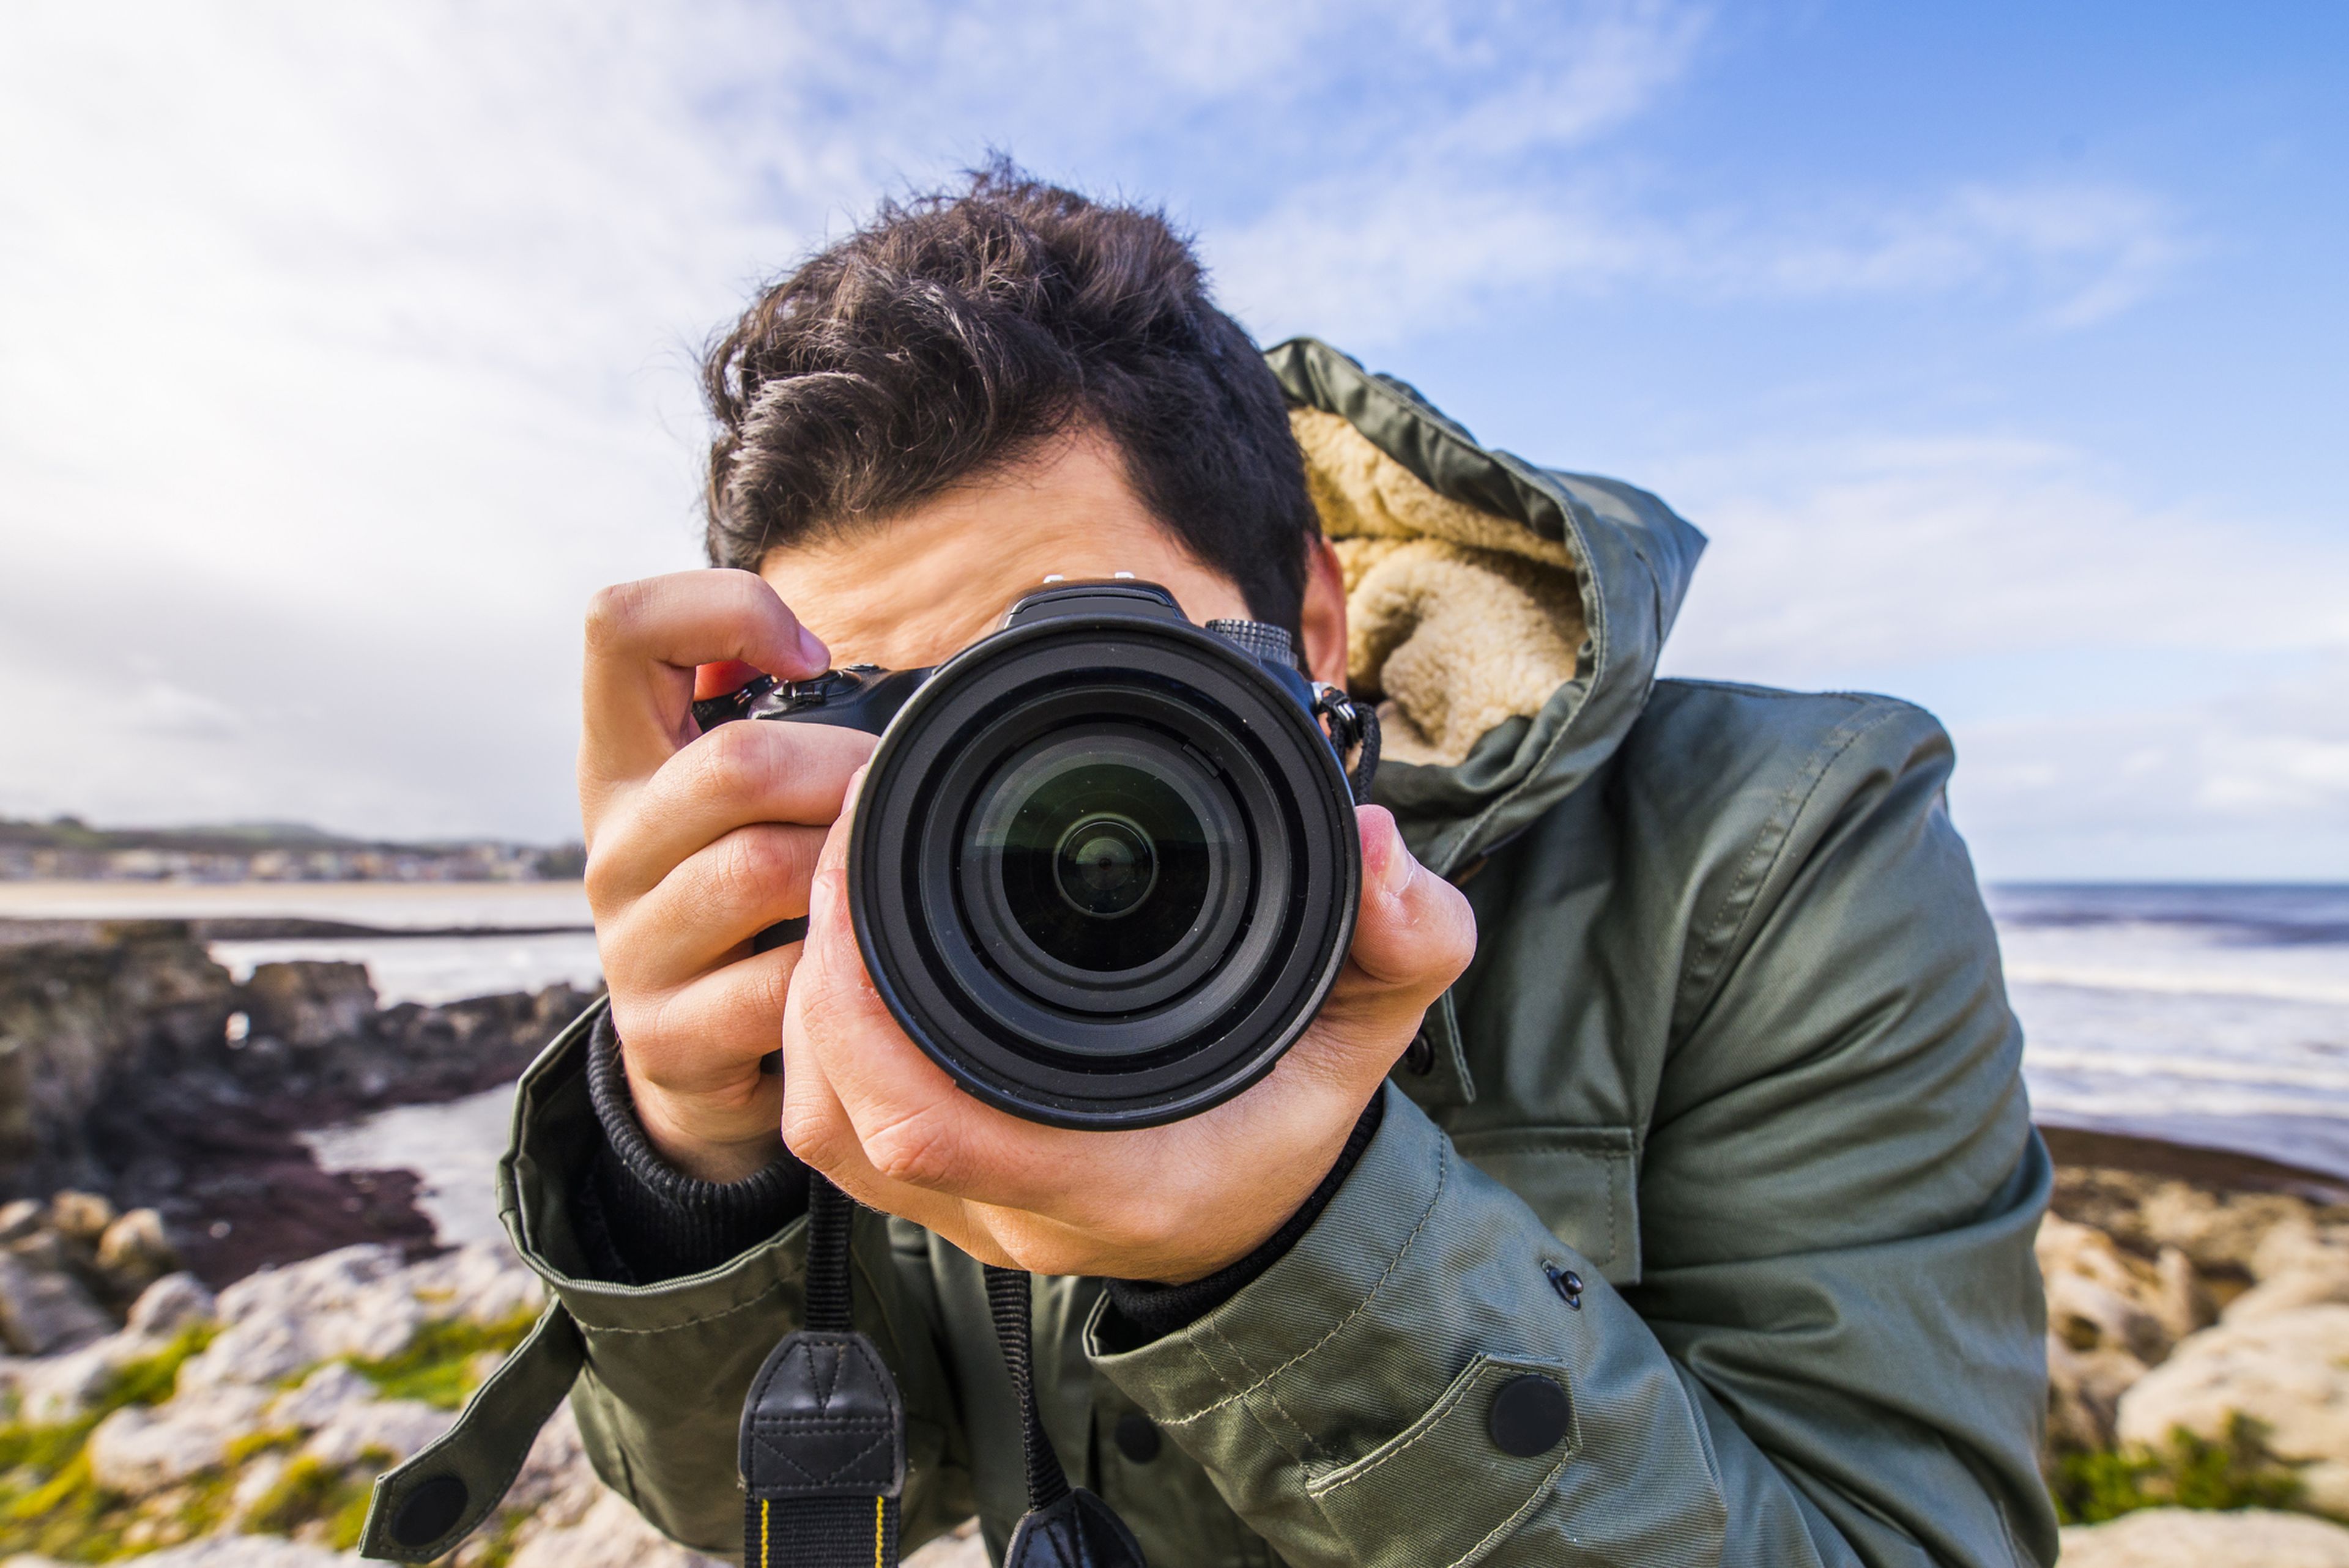 Las 7 mejores cámaras réflex para principiantes y fotógrafos amateur | Business Insider